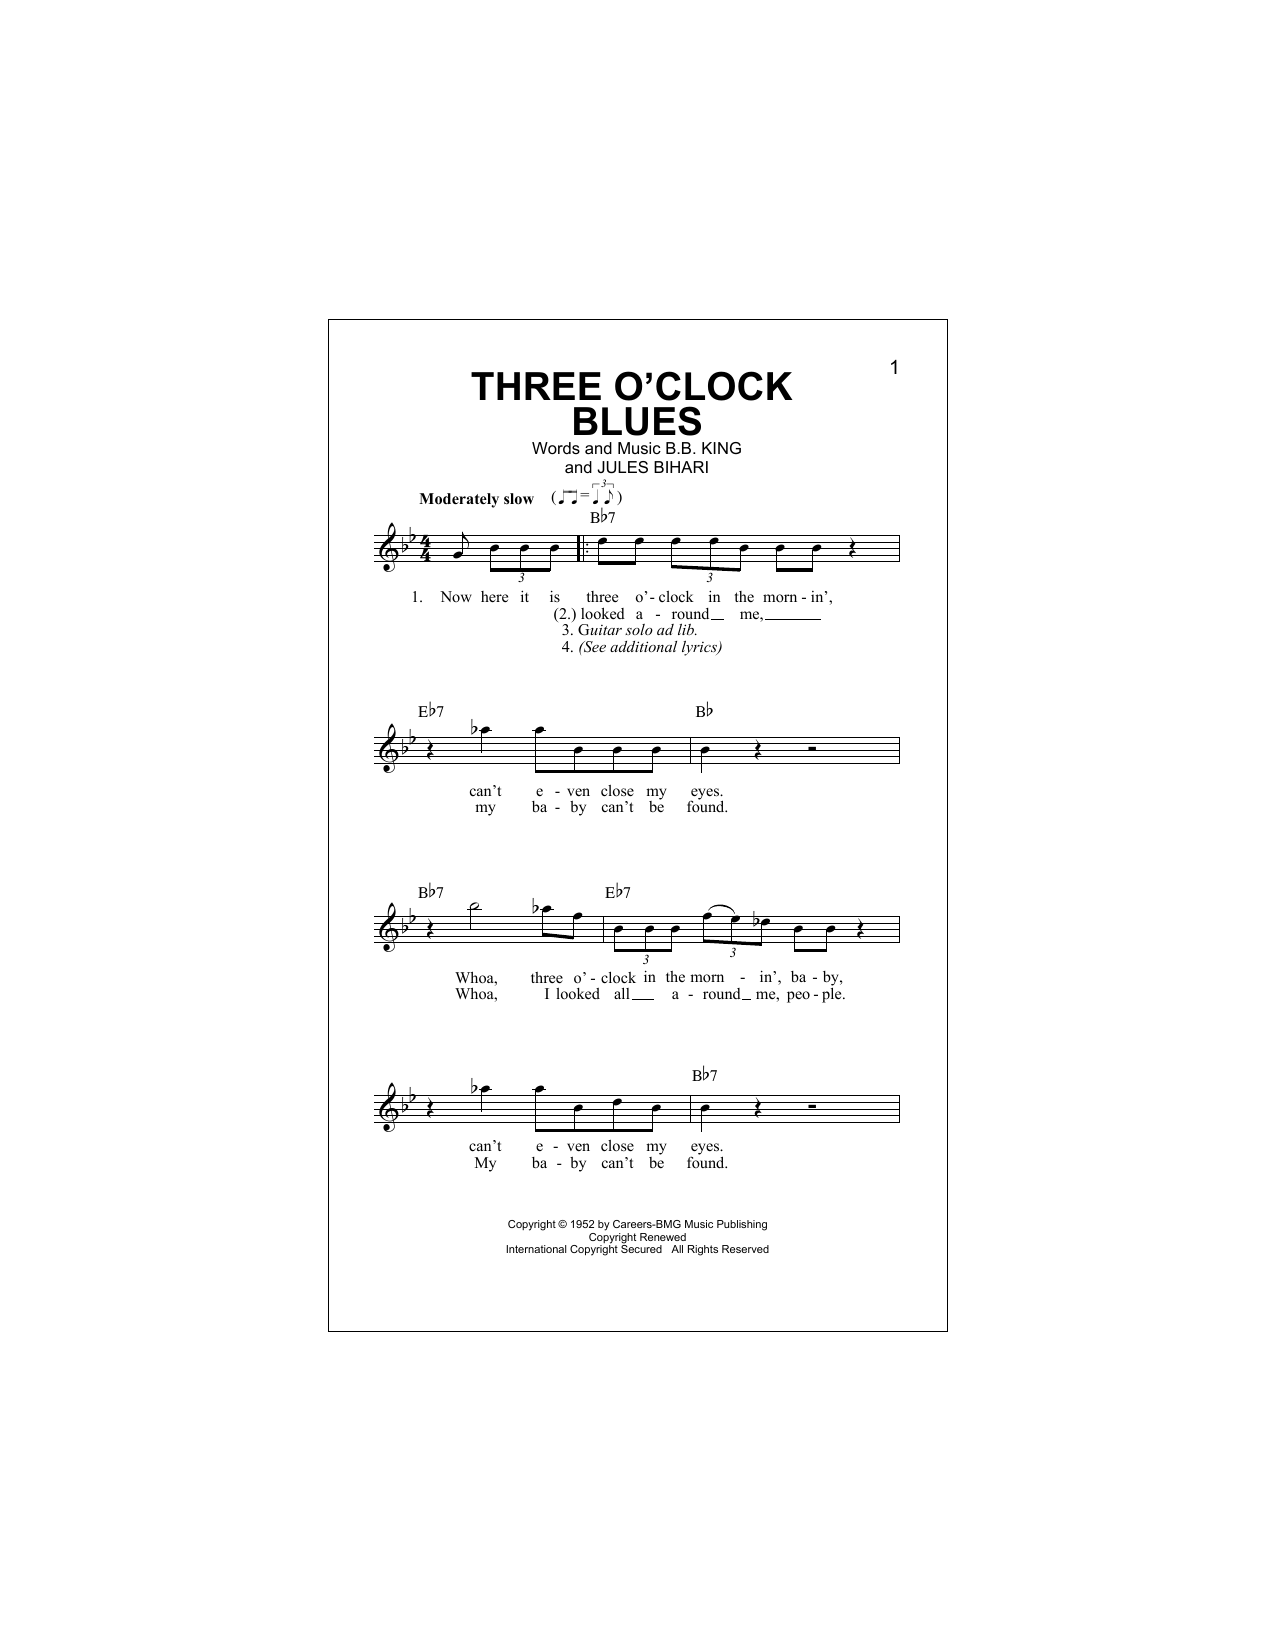 Download B.B. King Three O'Clock Blues Sheet Music